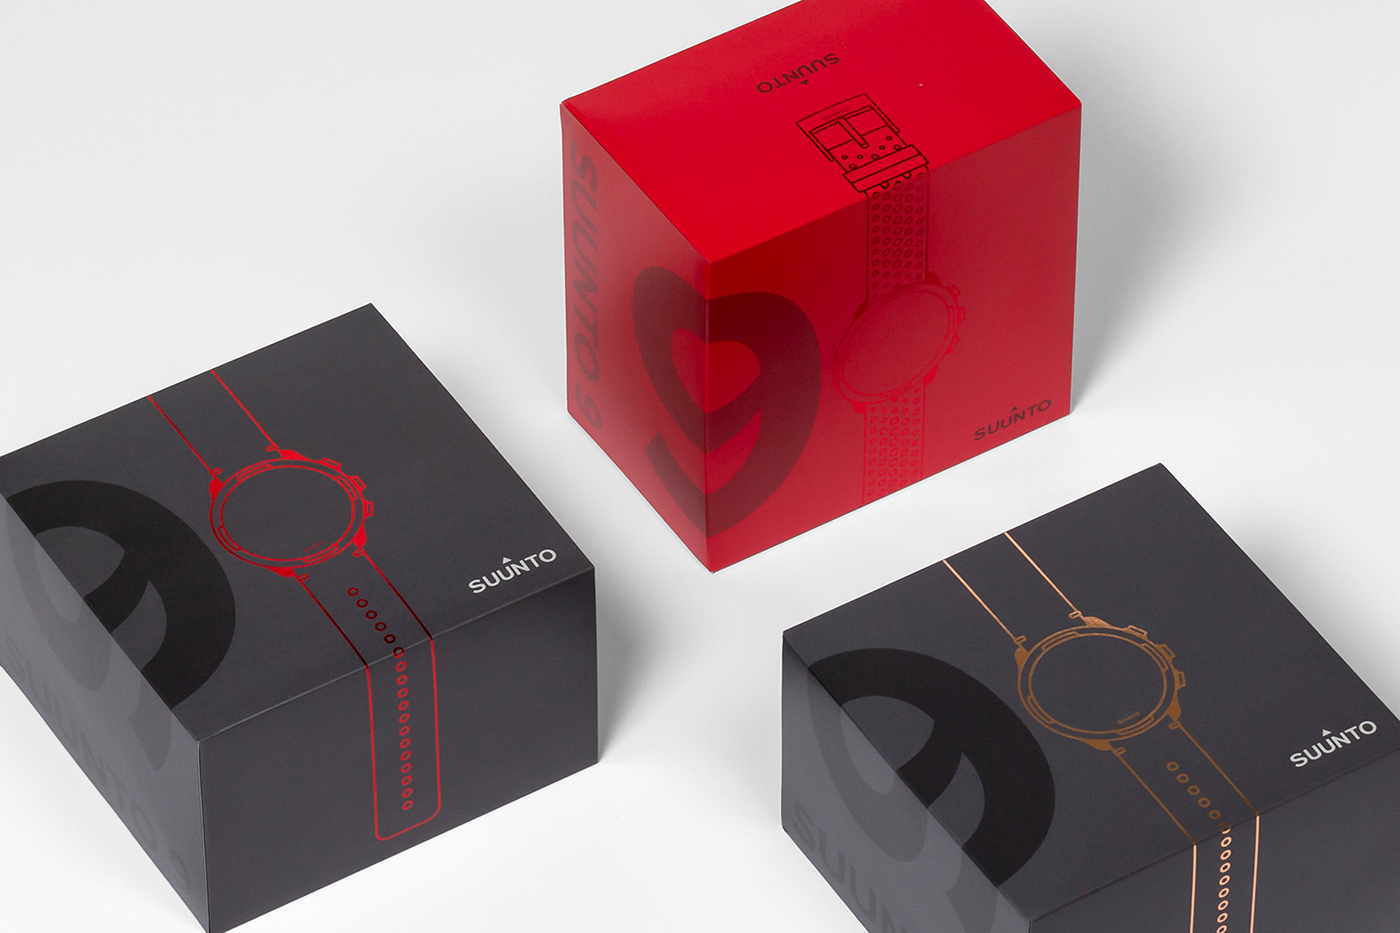 Suunto gift box packaging design